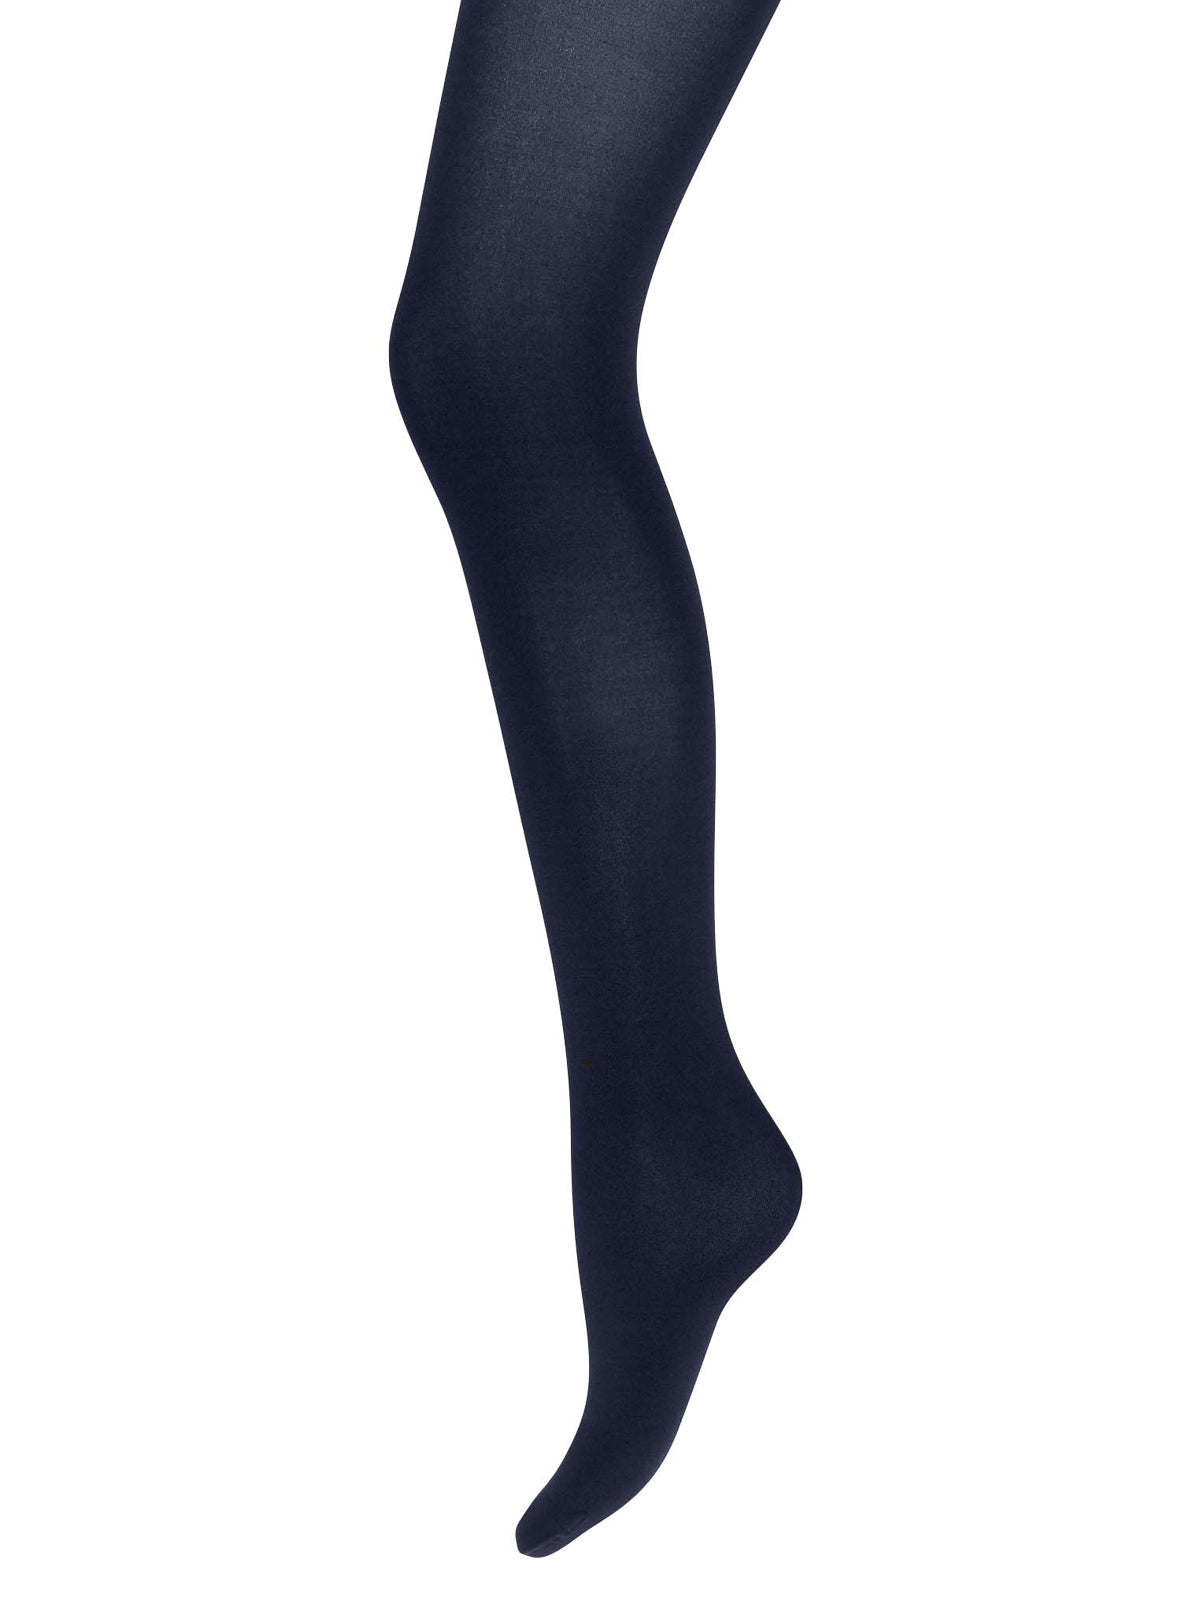 Velvet de Luxe 50 tights in black - Wolford